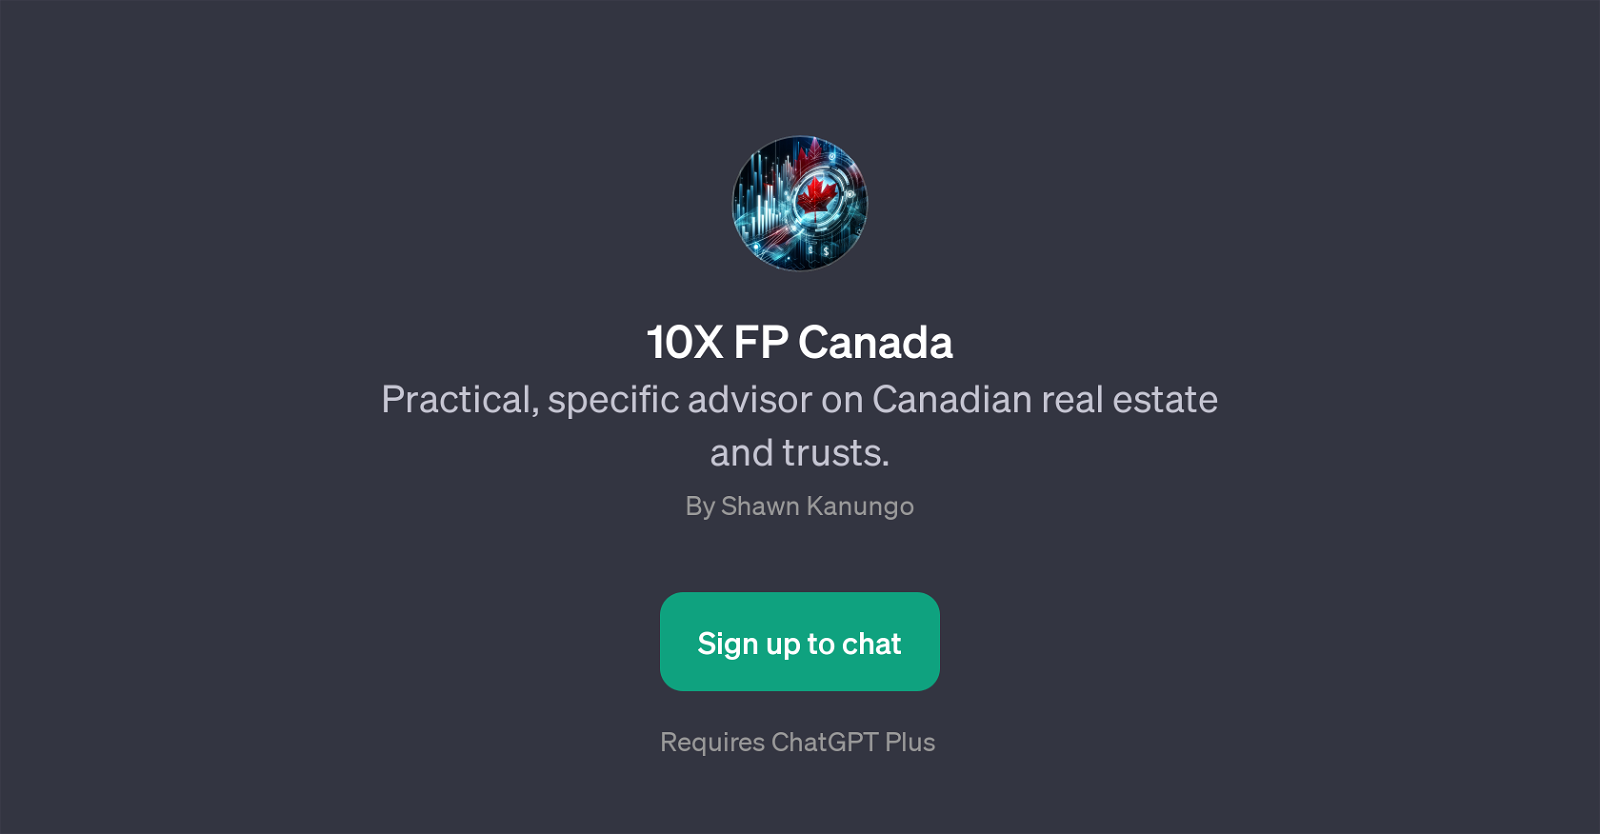 10X FP Canada website